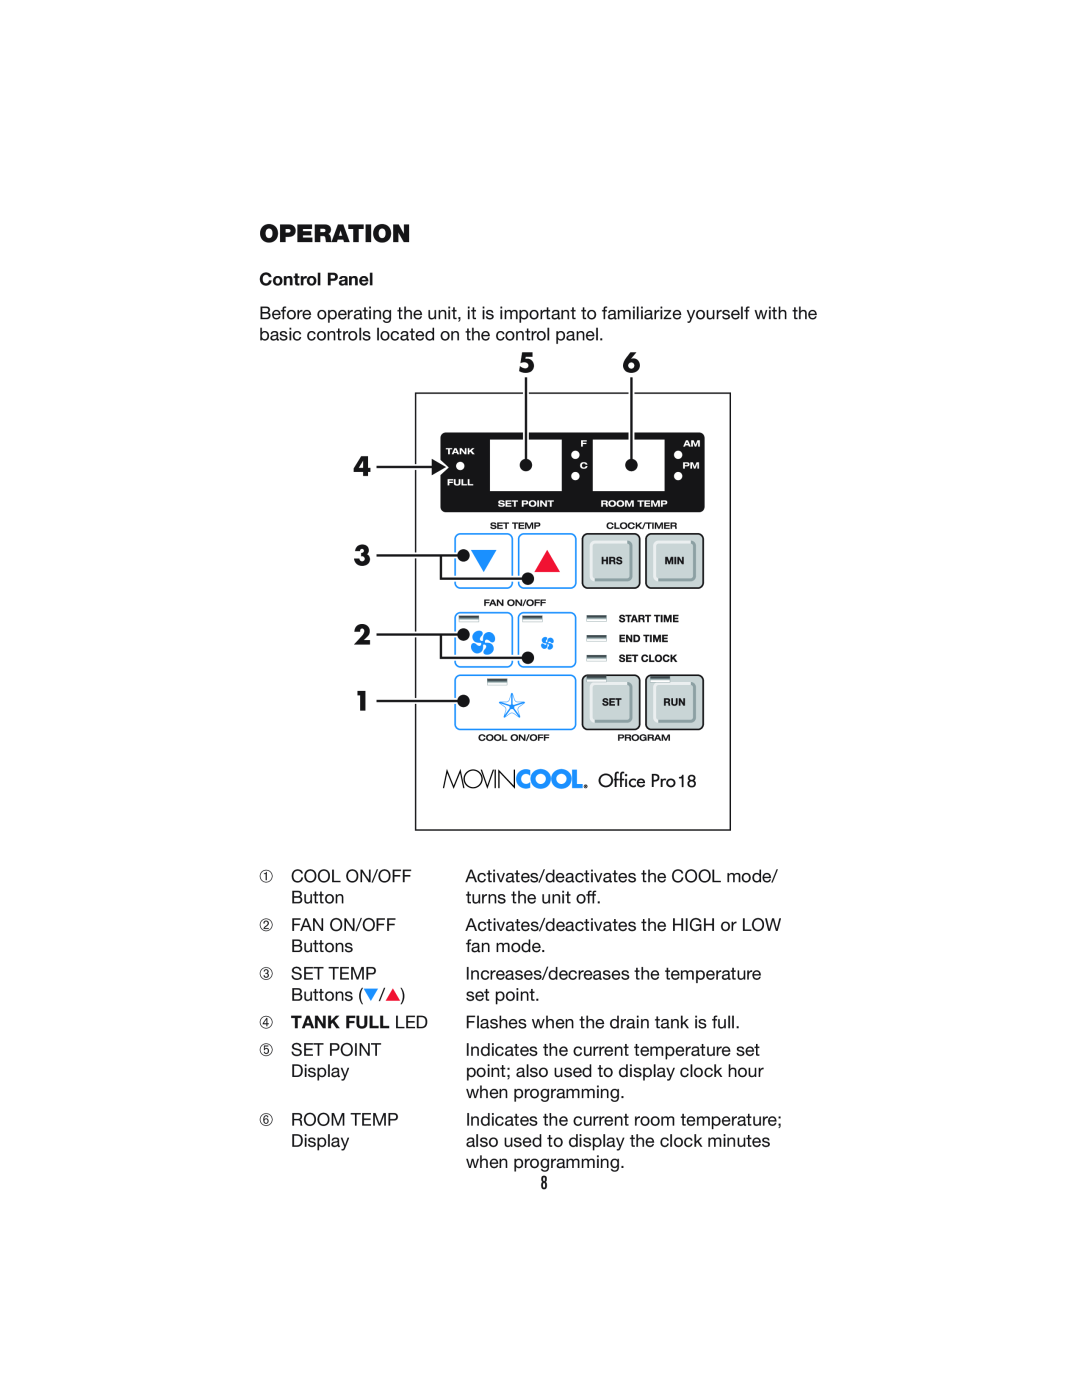 Denso PRO 18 operation manual Operation, Control Panel, Tank Full Led 